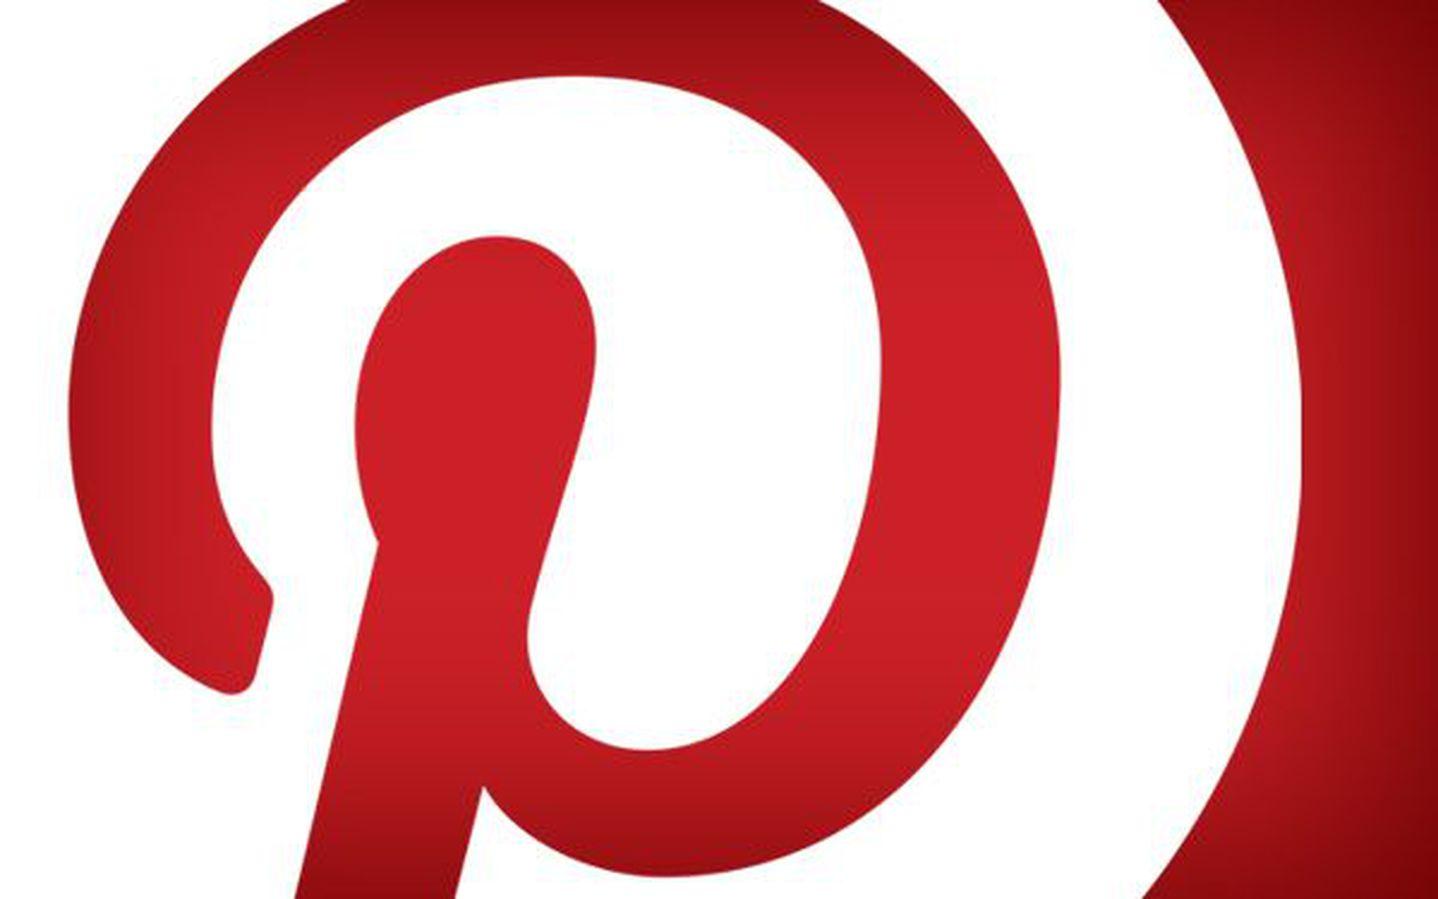 Pintrest Official Logo - Pinterest Official Logo | www.topsimages.com